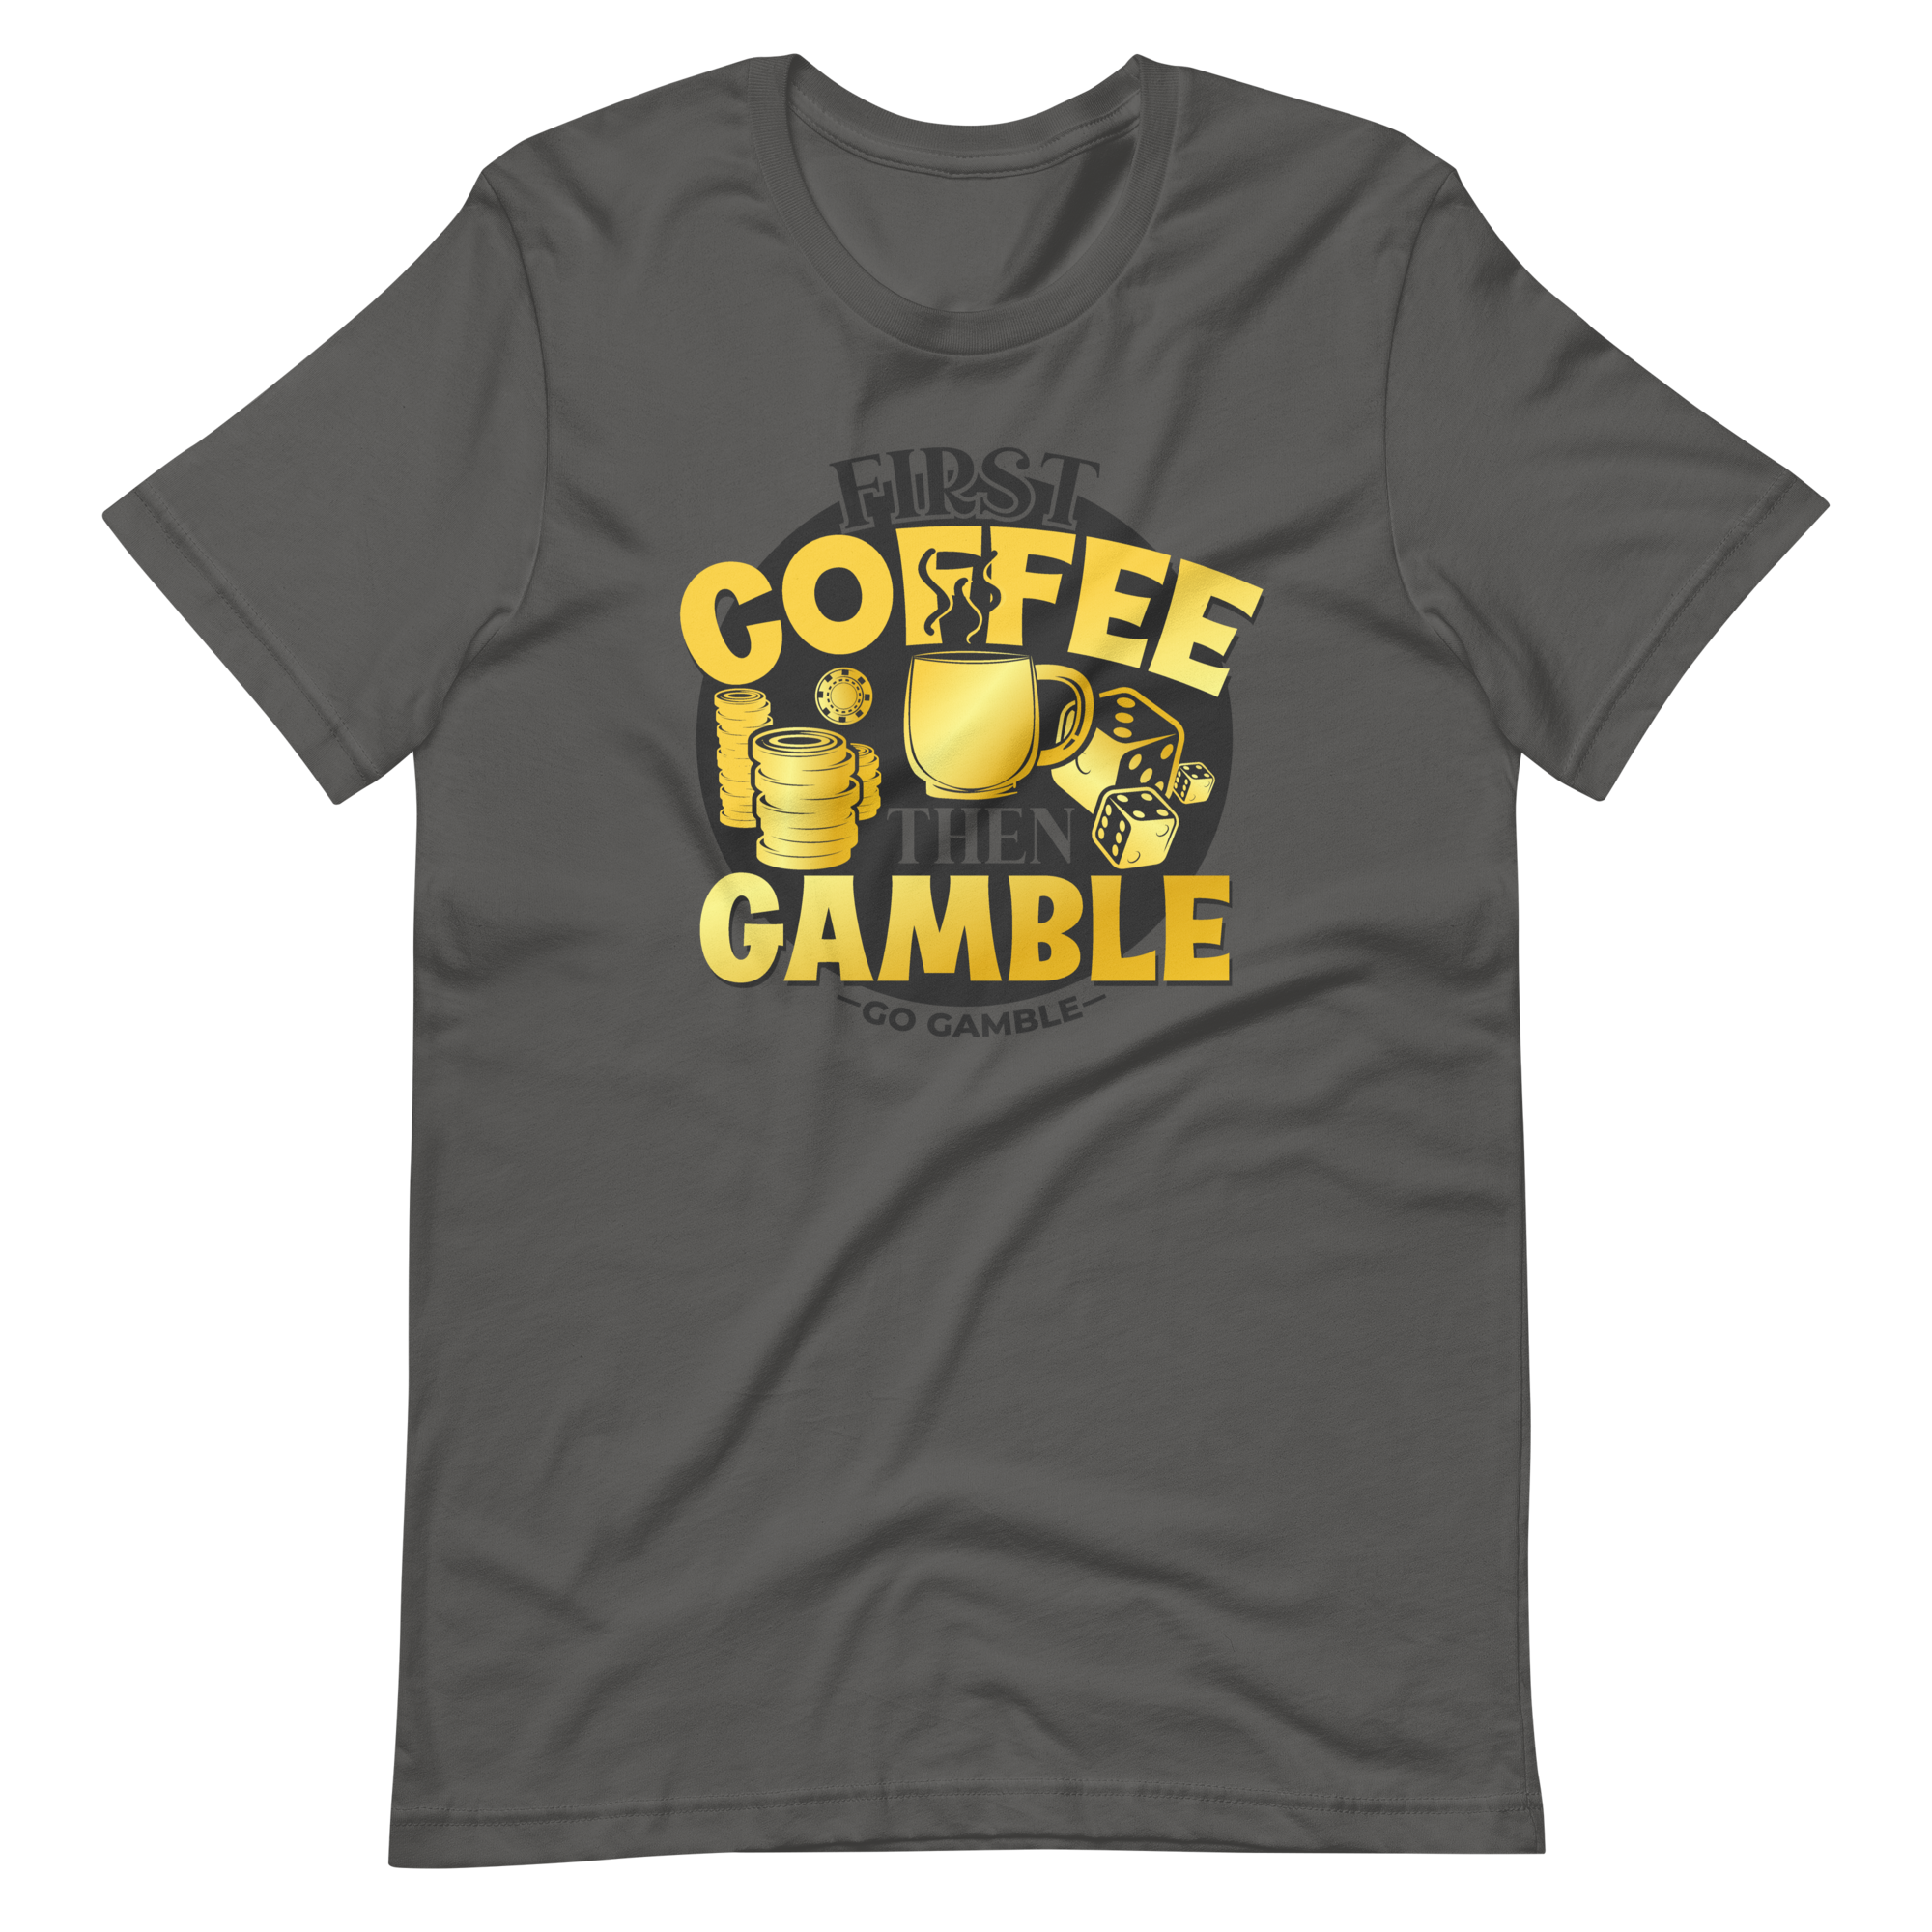 First coffee then gamble t-shirt